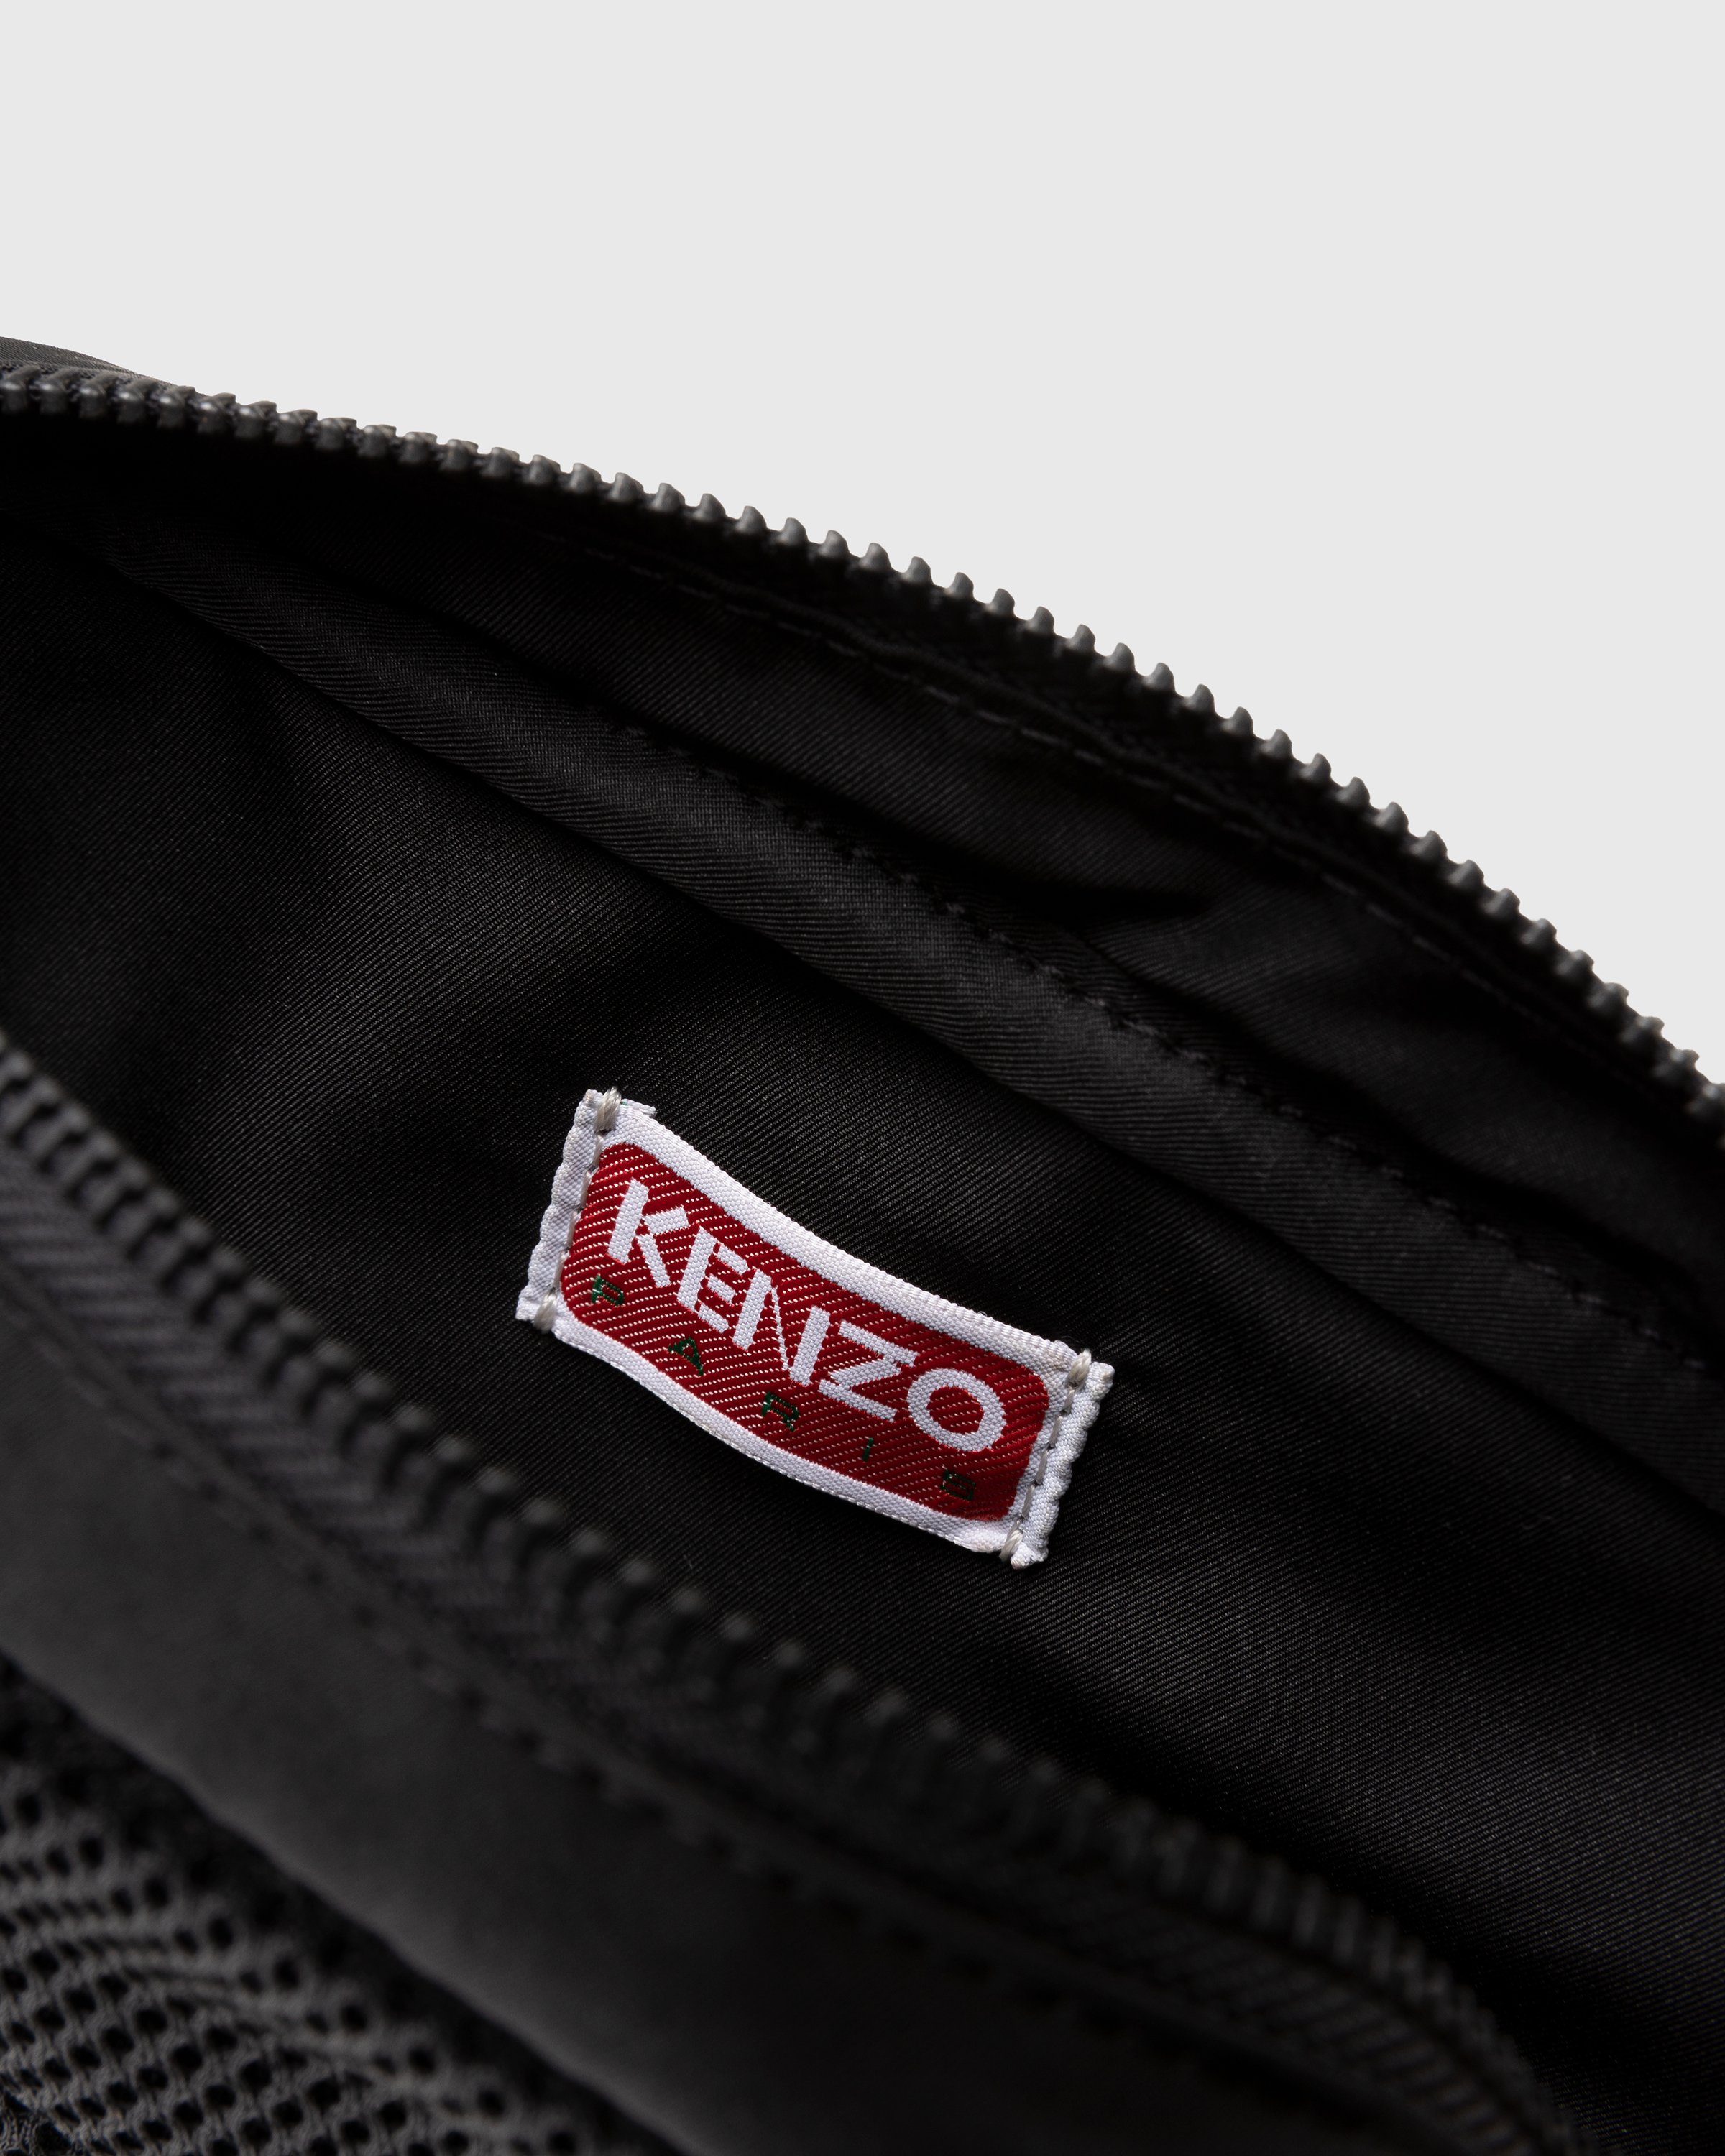 Kenzo - Crest Crossbody Bag Black - Accessories - Black - Image 6